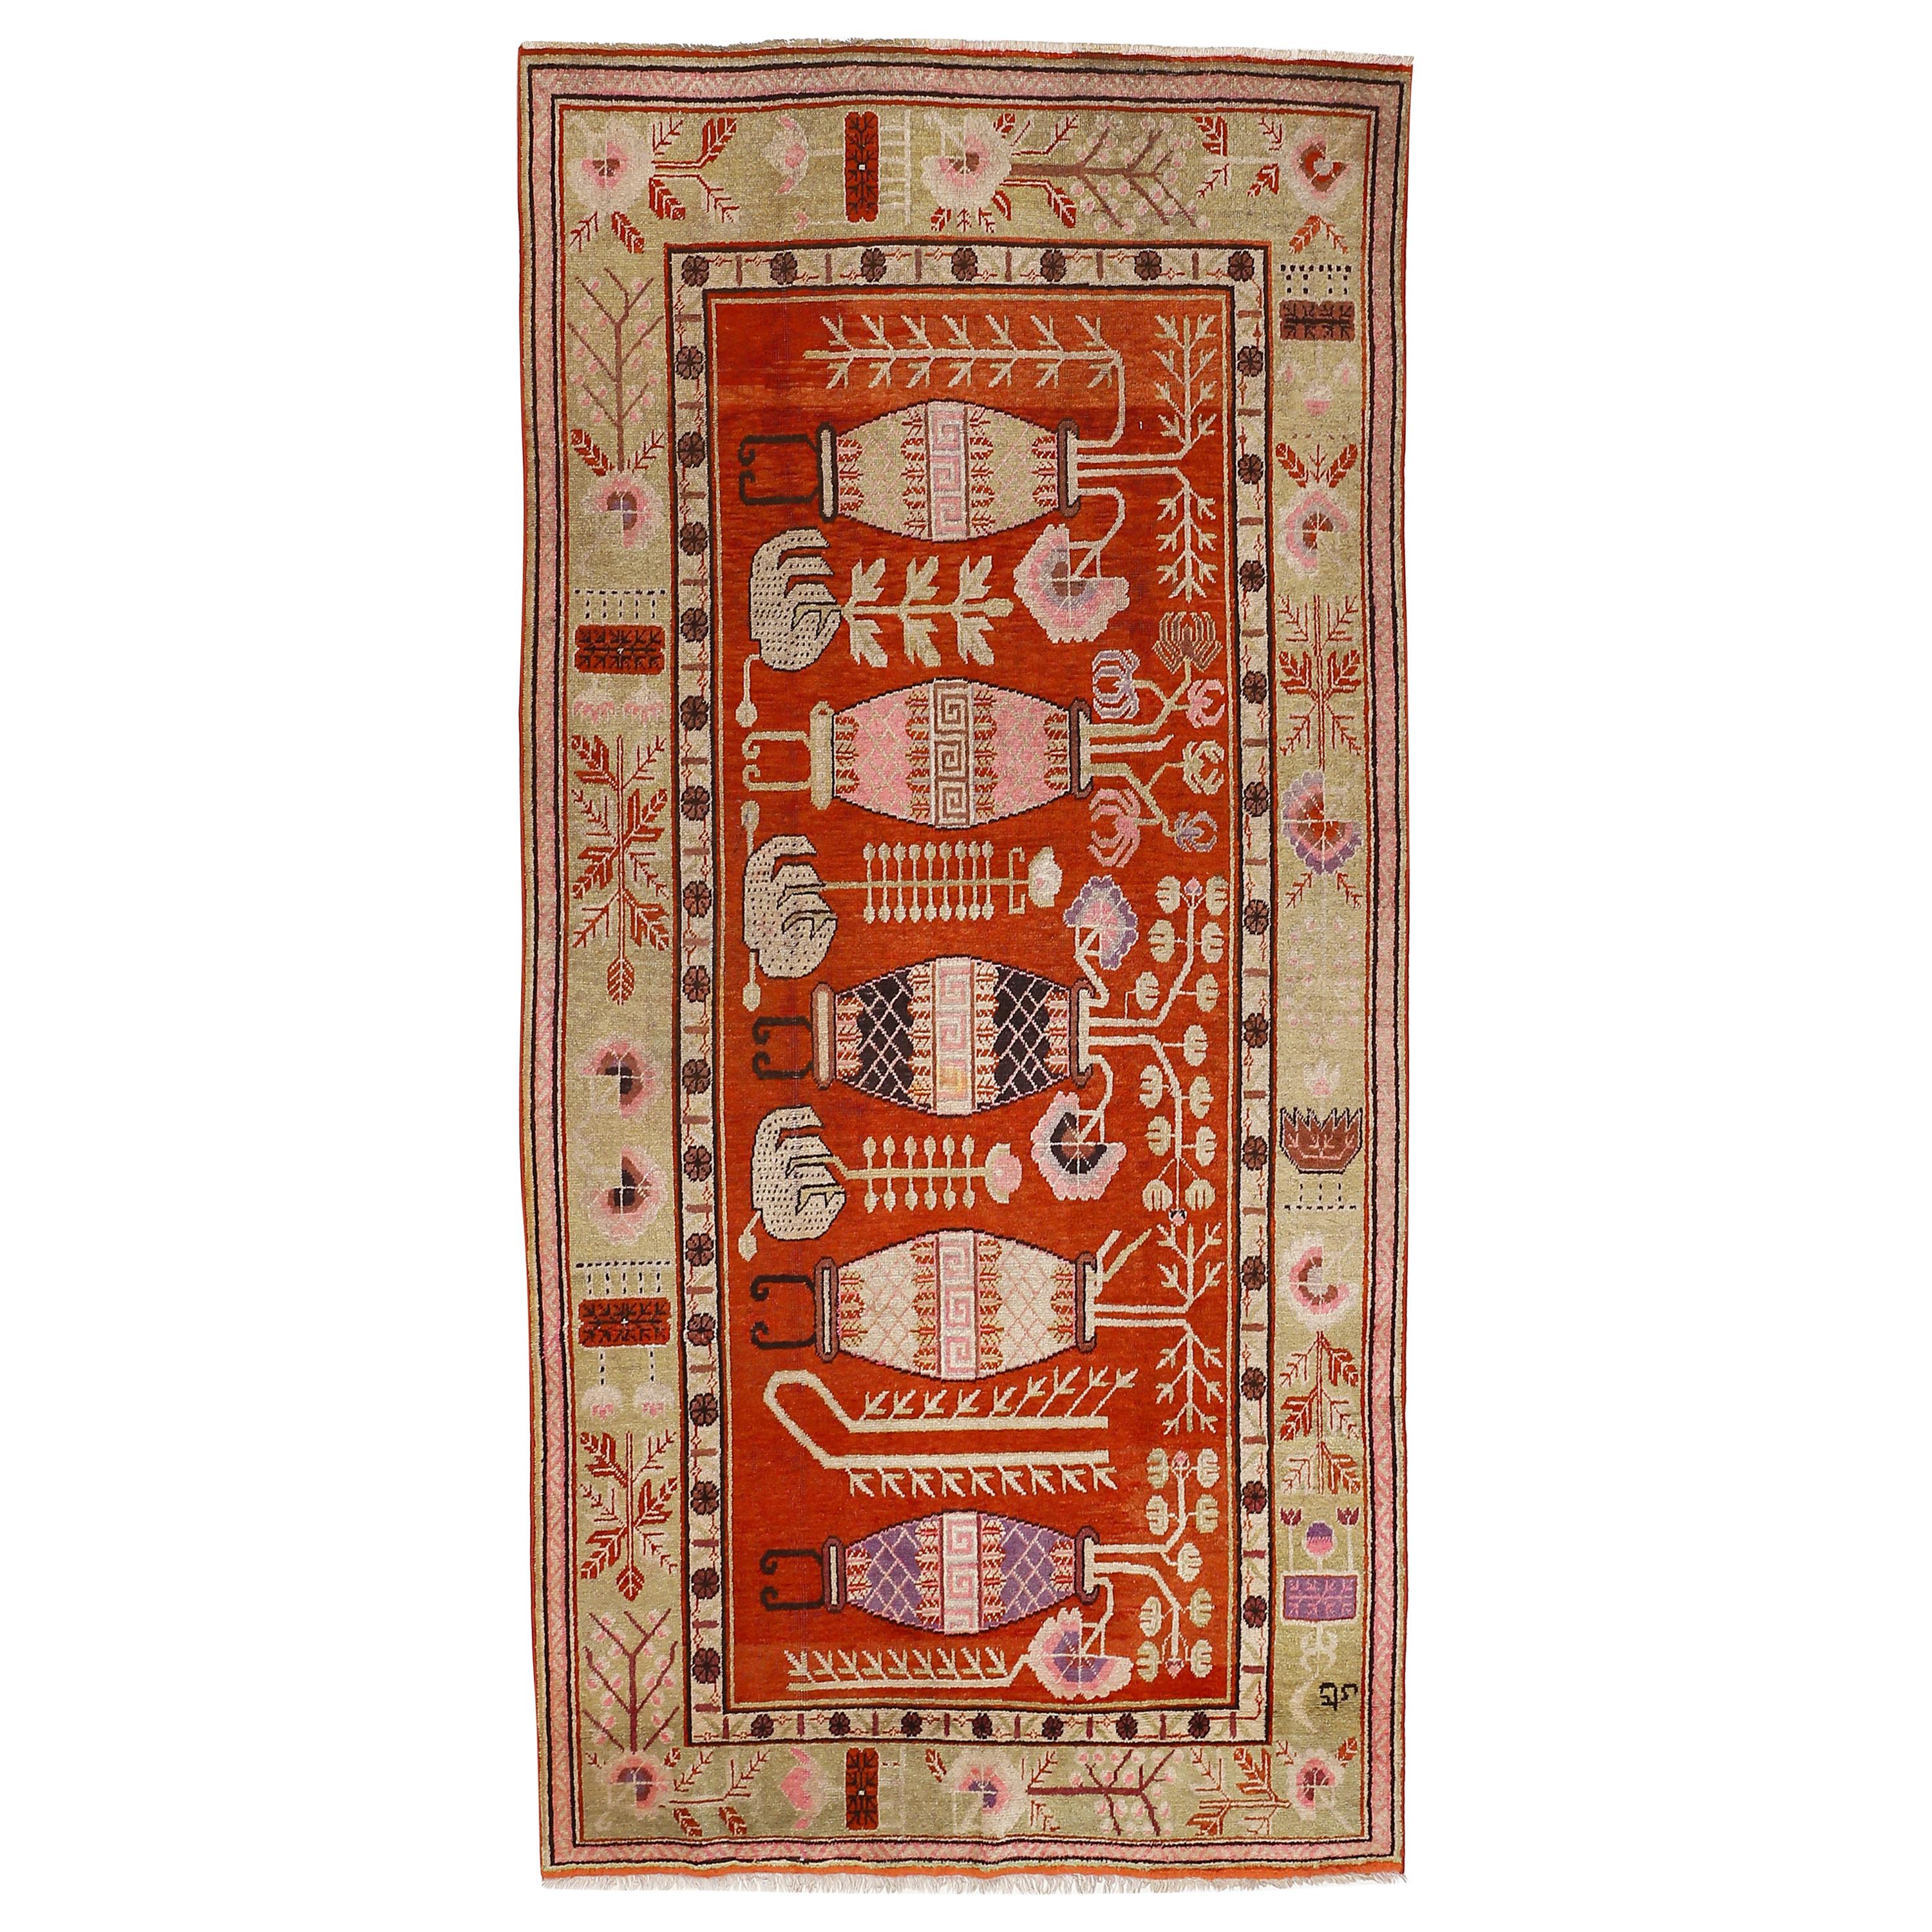 Antique Art Deco Samarkand Prestige Rug with Flowering Antique Chinese Vases